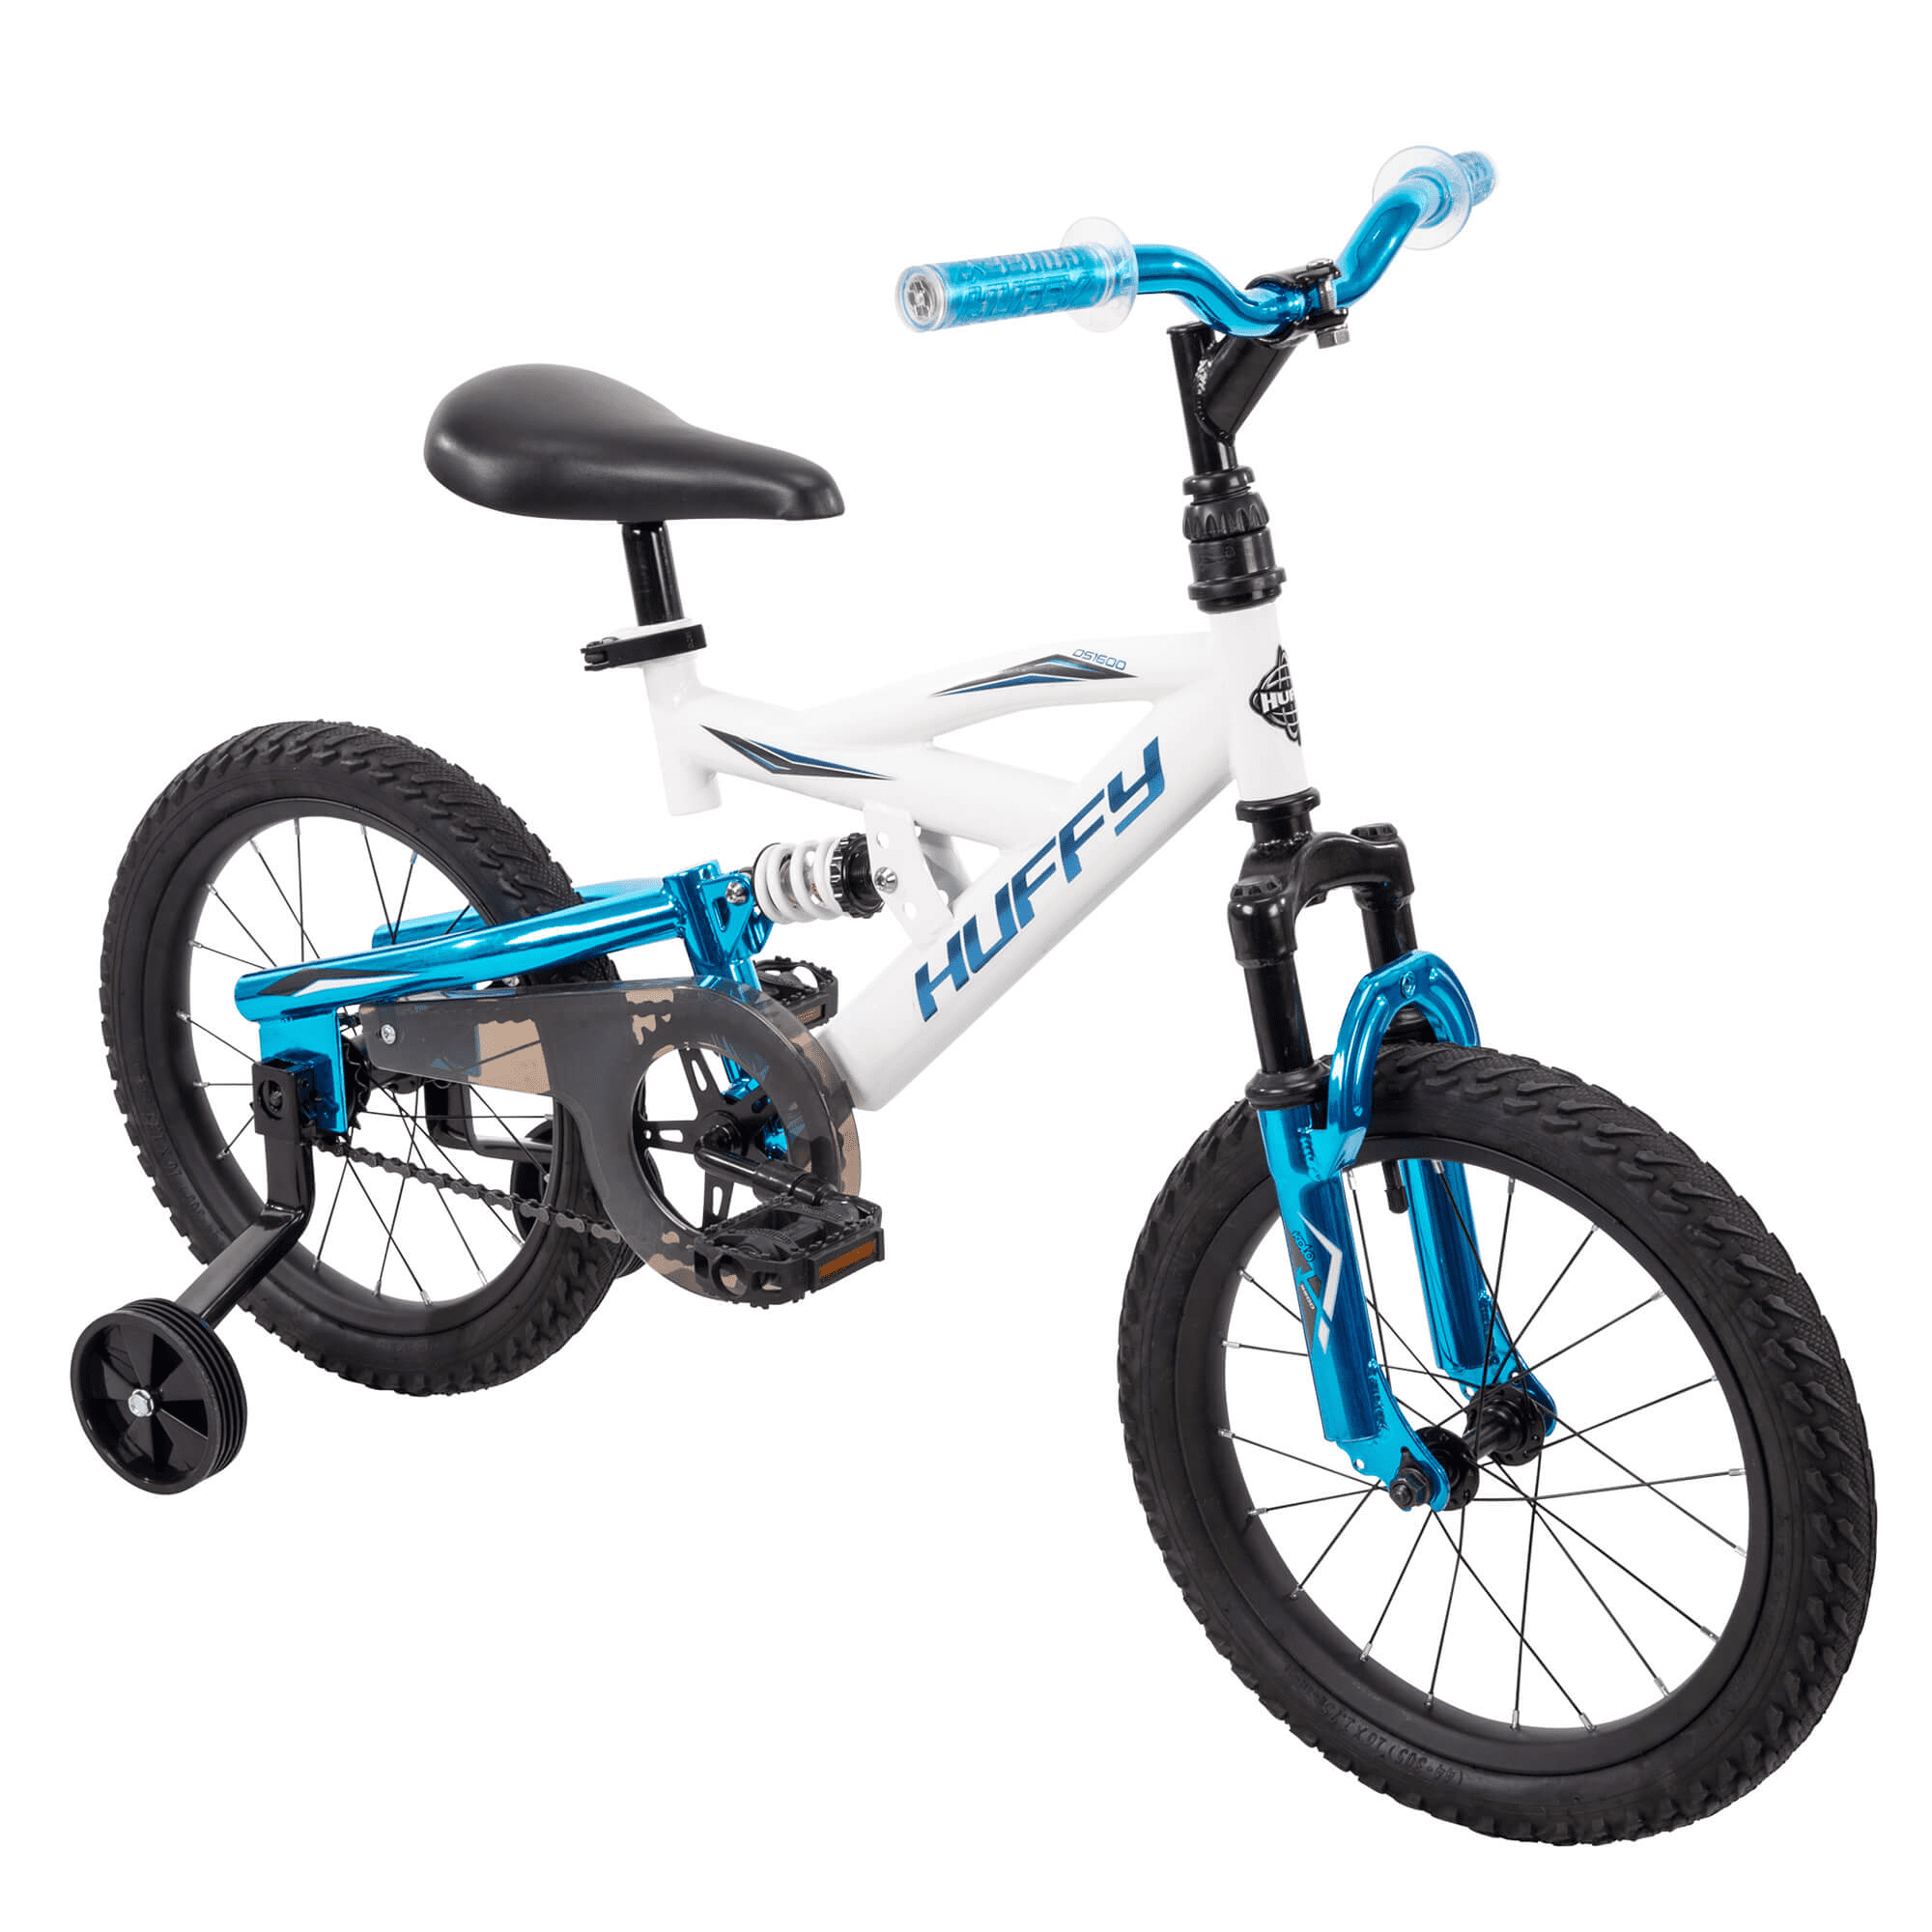 16 inch toddler bike